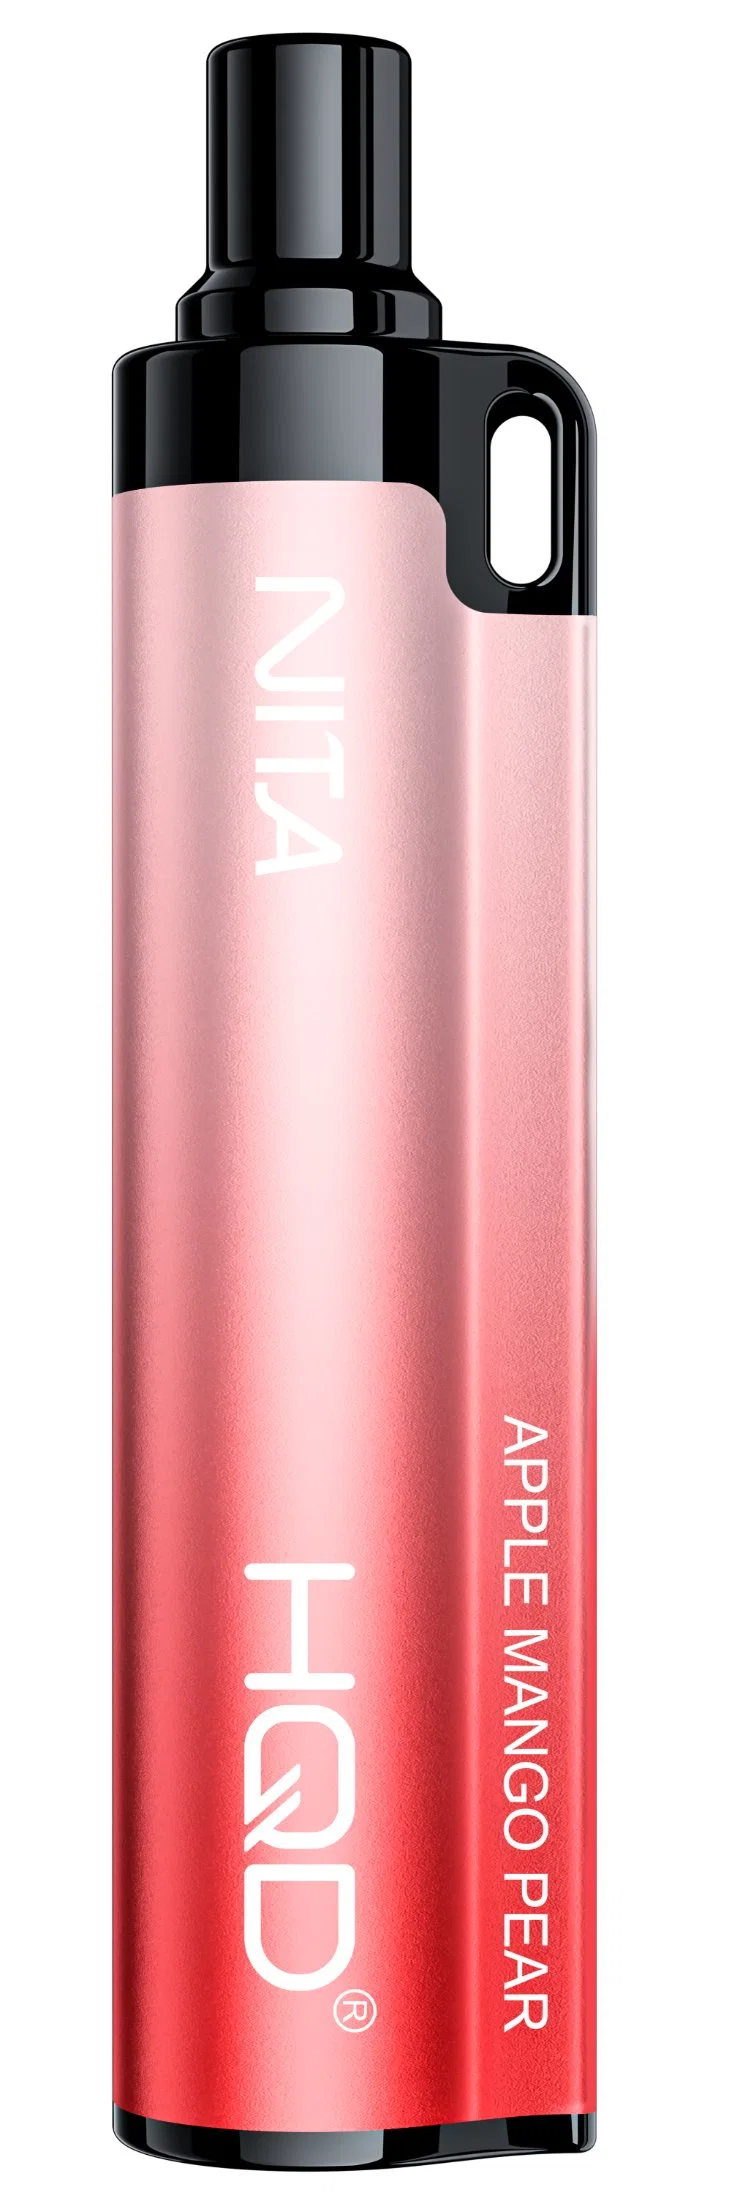 Factory vape Battery Device Vape Pen Hqd Nita 600 Puffs Convenient Power Charge Pure Cobalt Batteries